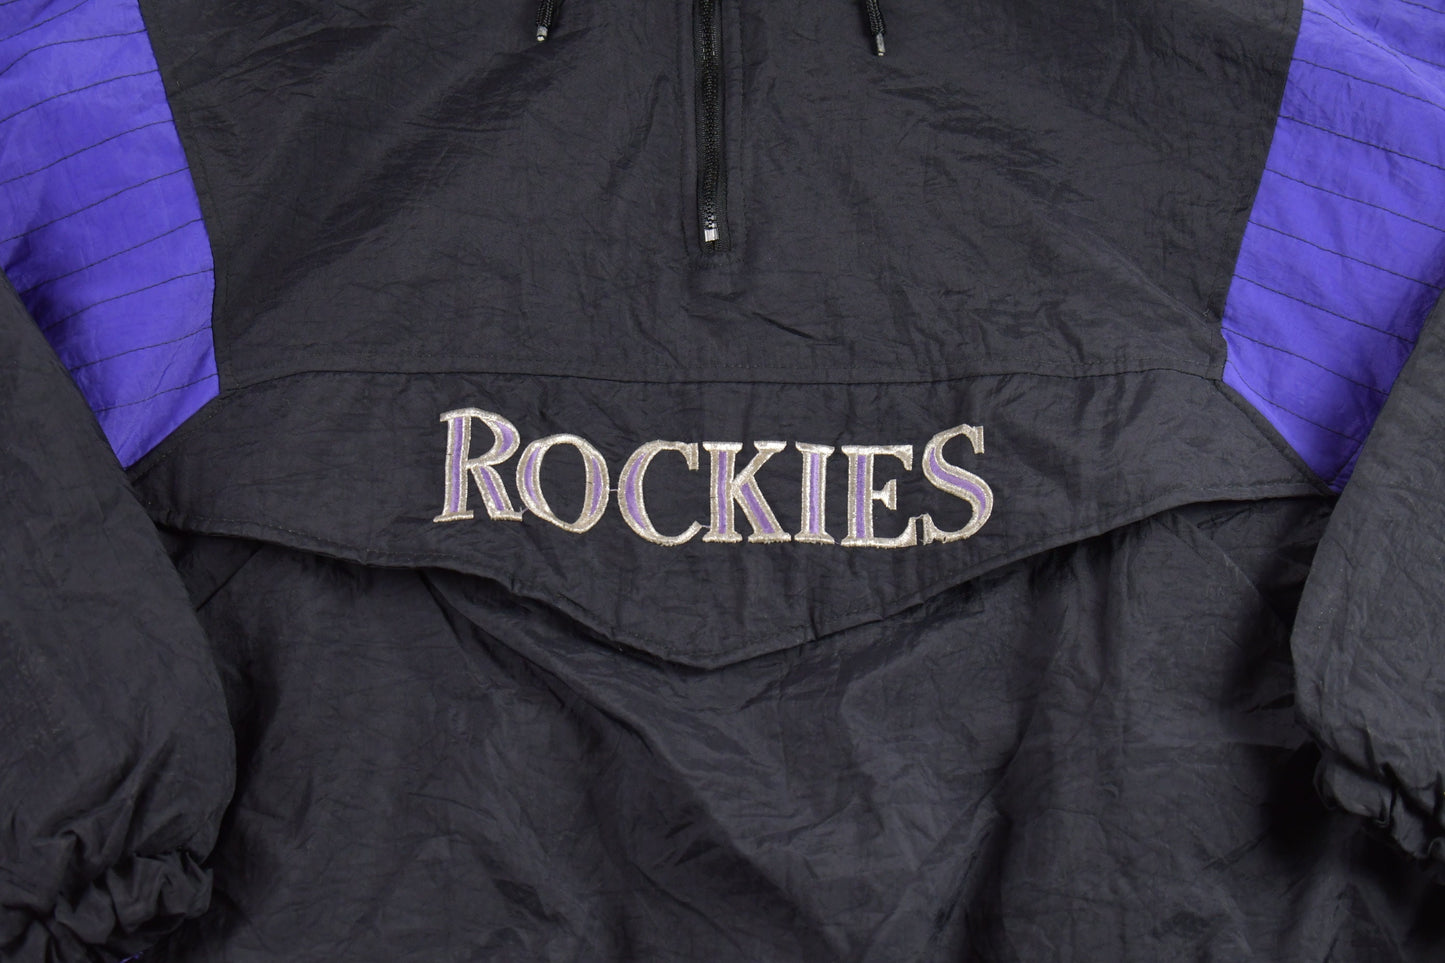 Vintage 1990s Colorado Rockies MLB Starter Jacket / Half Zip / Baseball / Sportswear / 90s / Quarter Zip / Embroidered / 90s MLB Gift